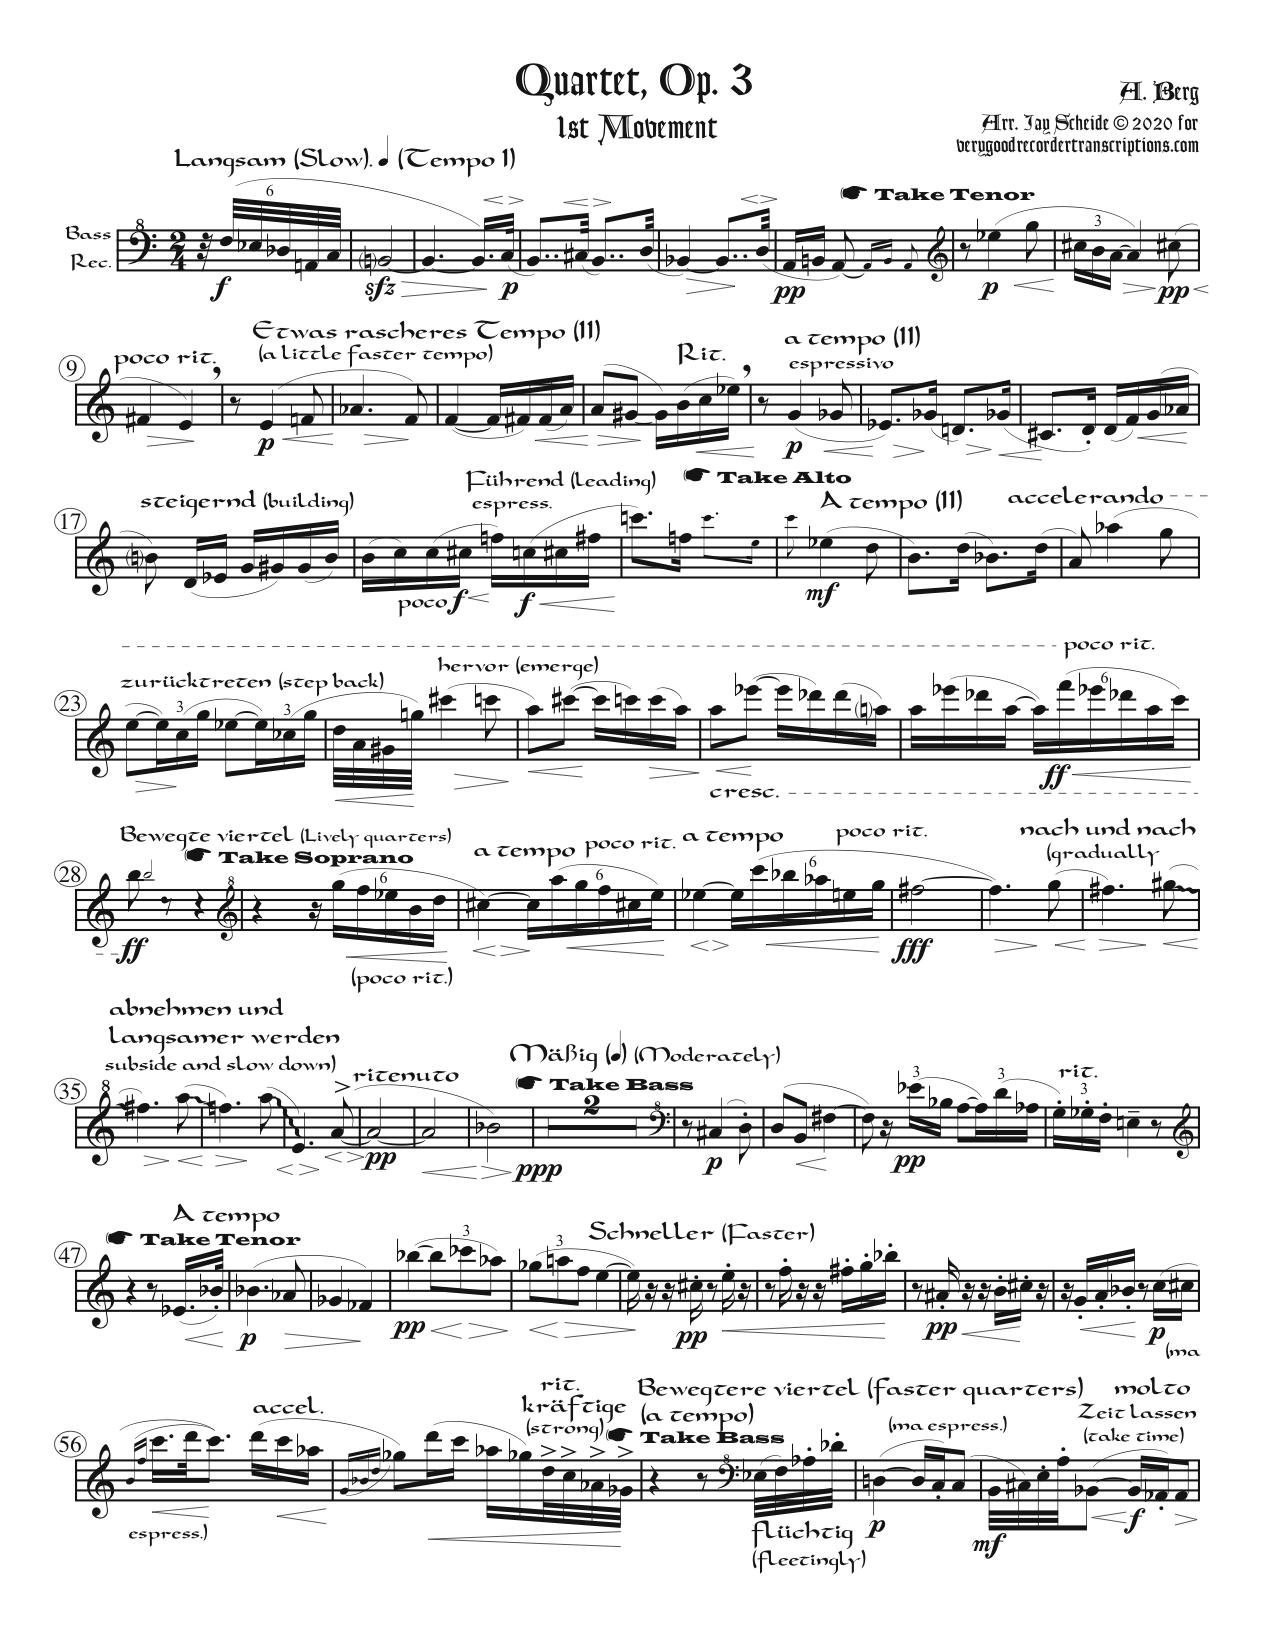 Quartet, Op. 3, arr. for 5 sizes of recorder in alternation